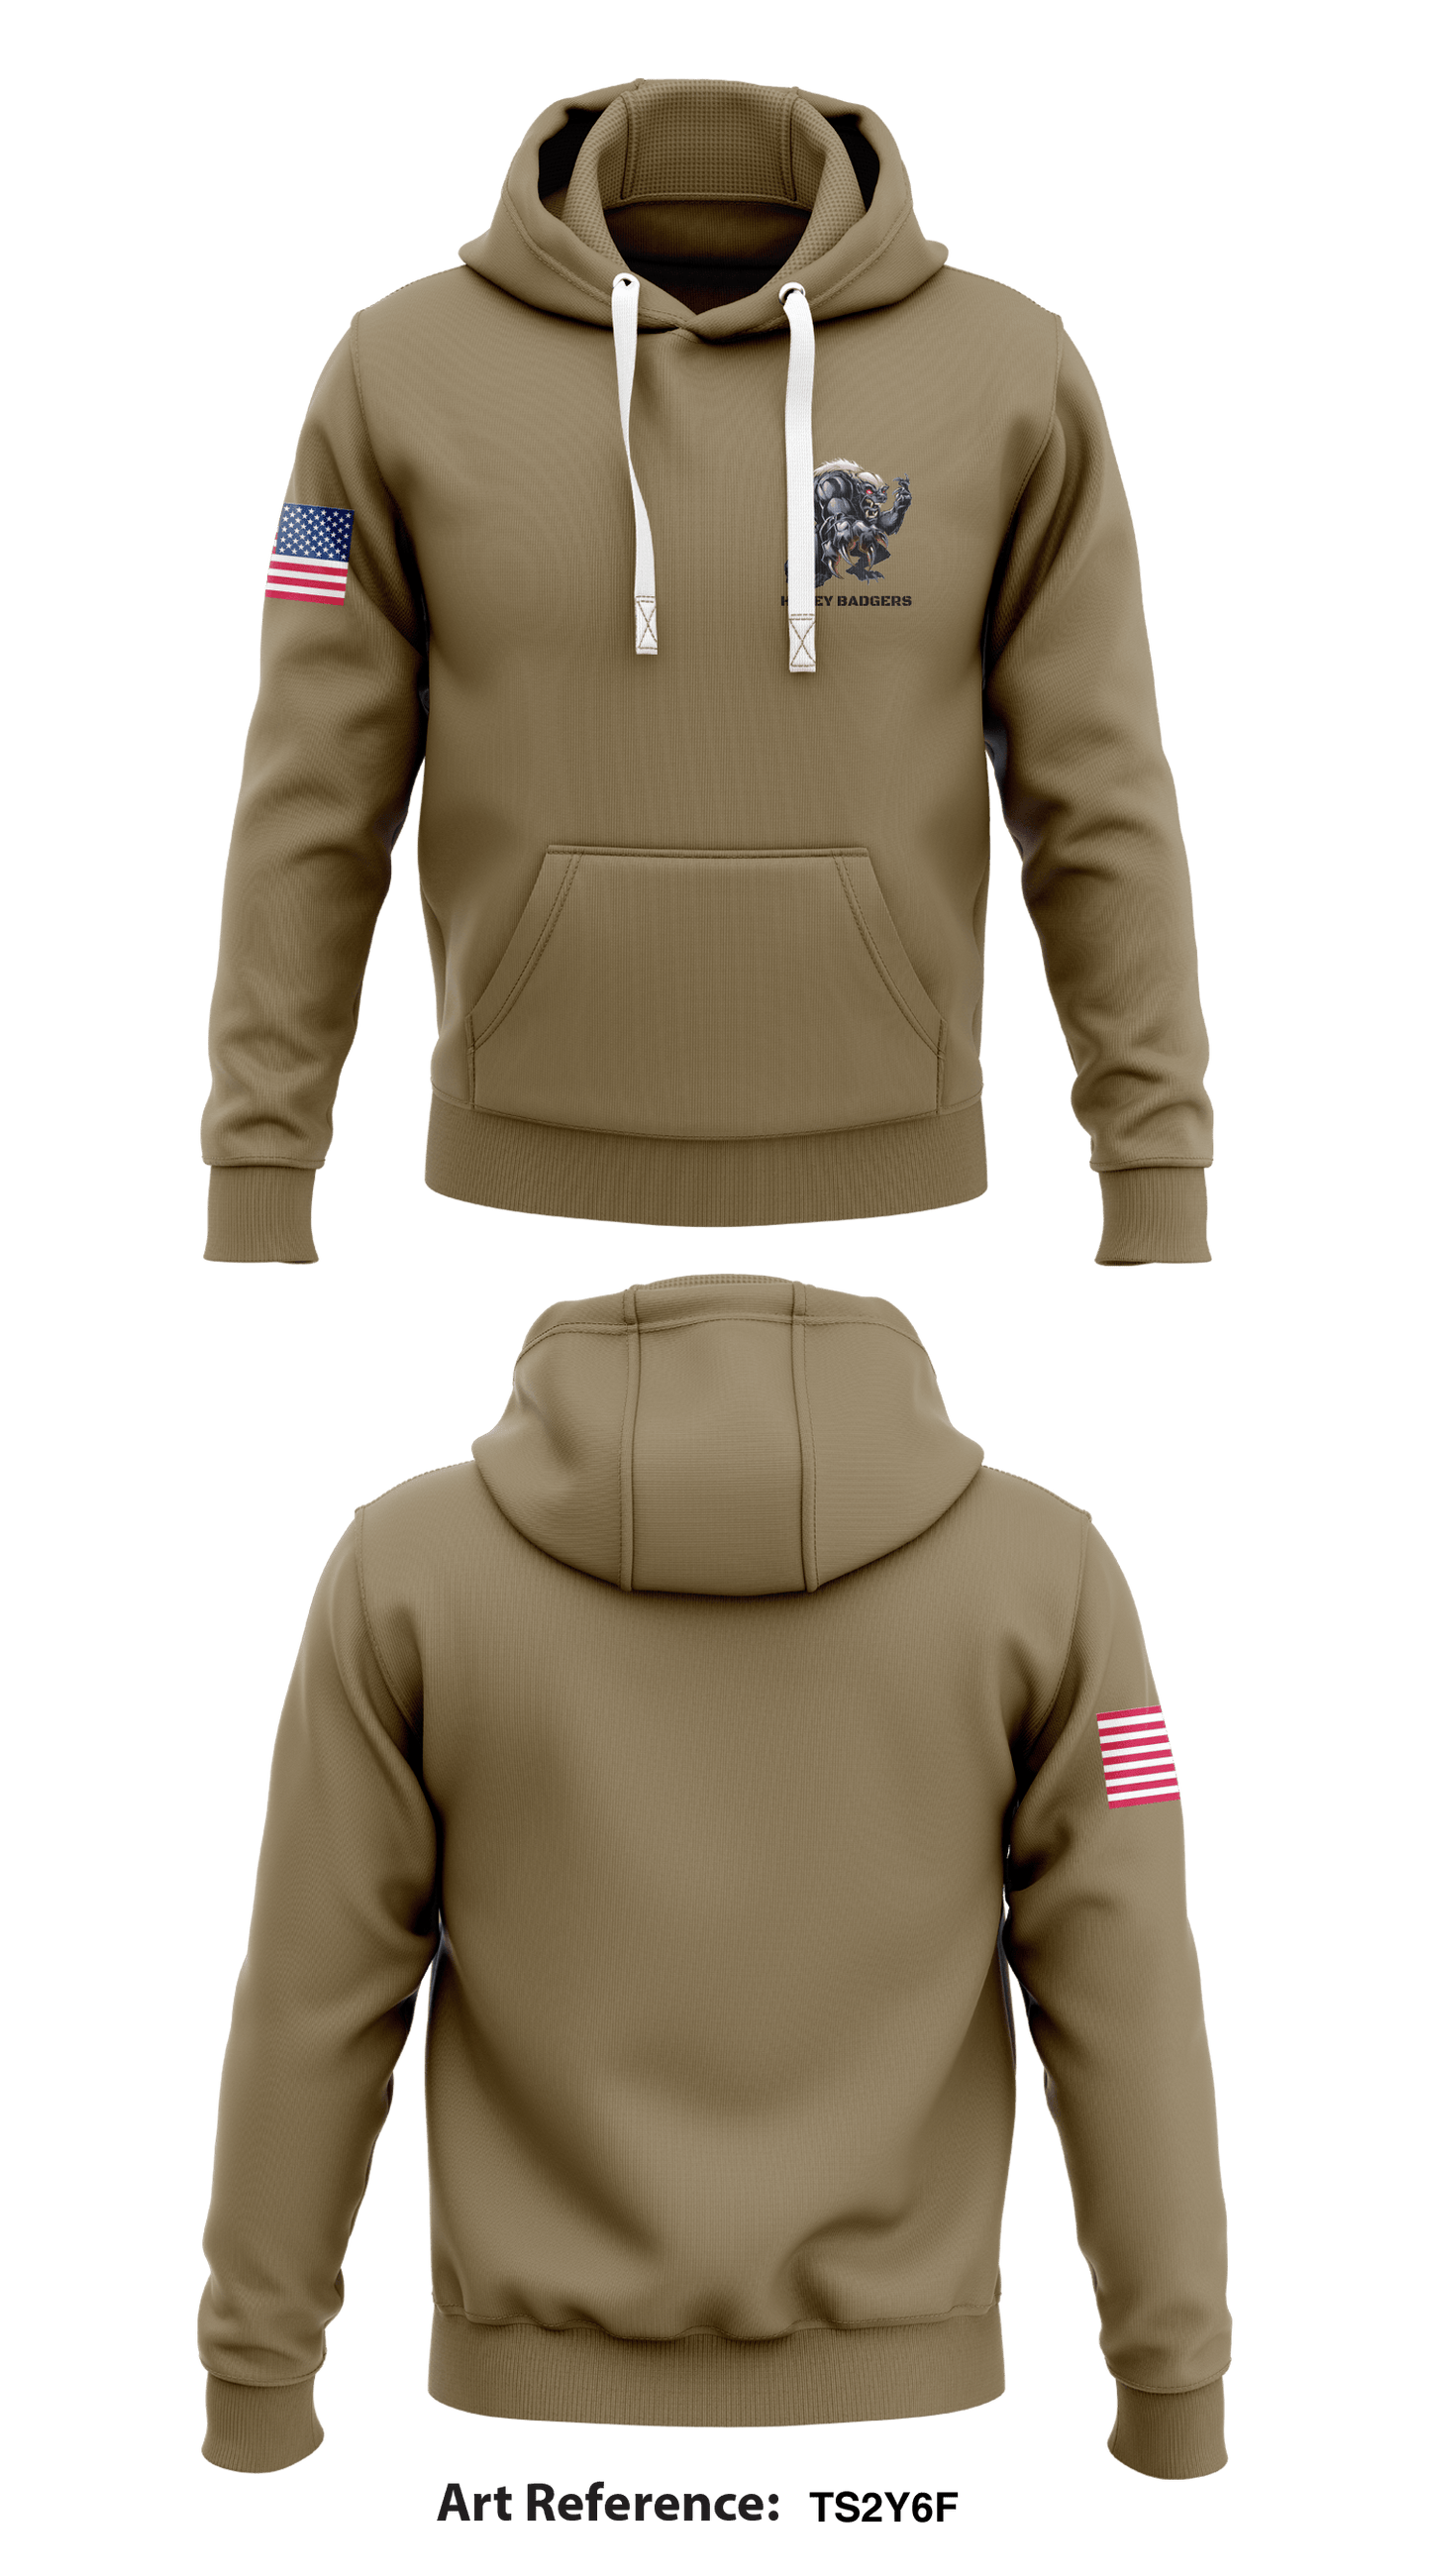 Honey Badgers1  Core Men's Hooded Performance Sweatshirt - TS2y6F